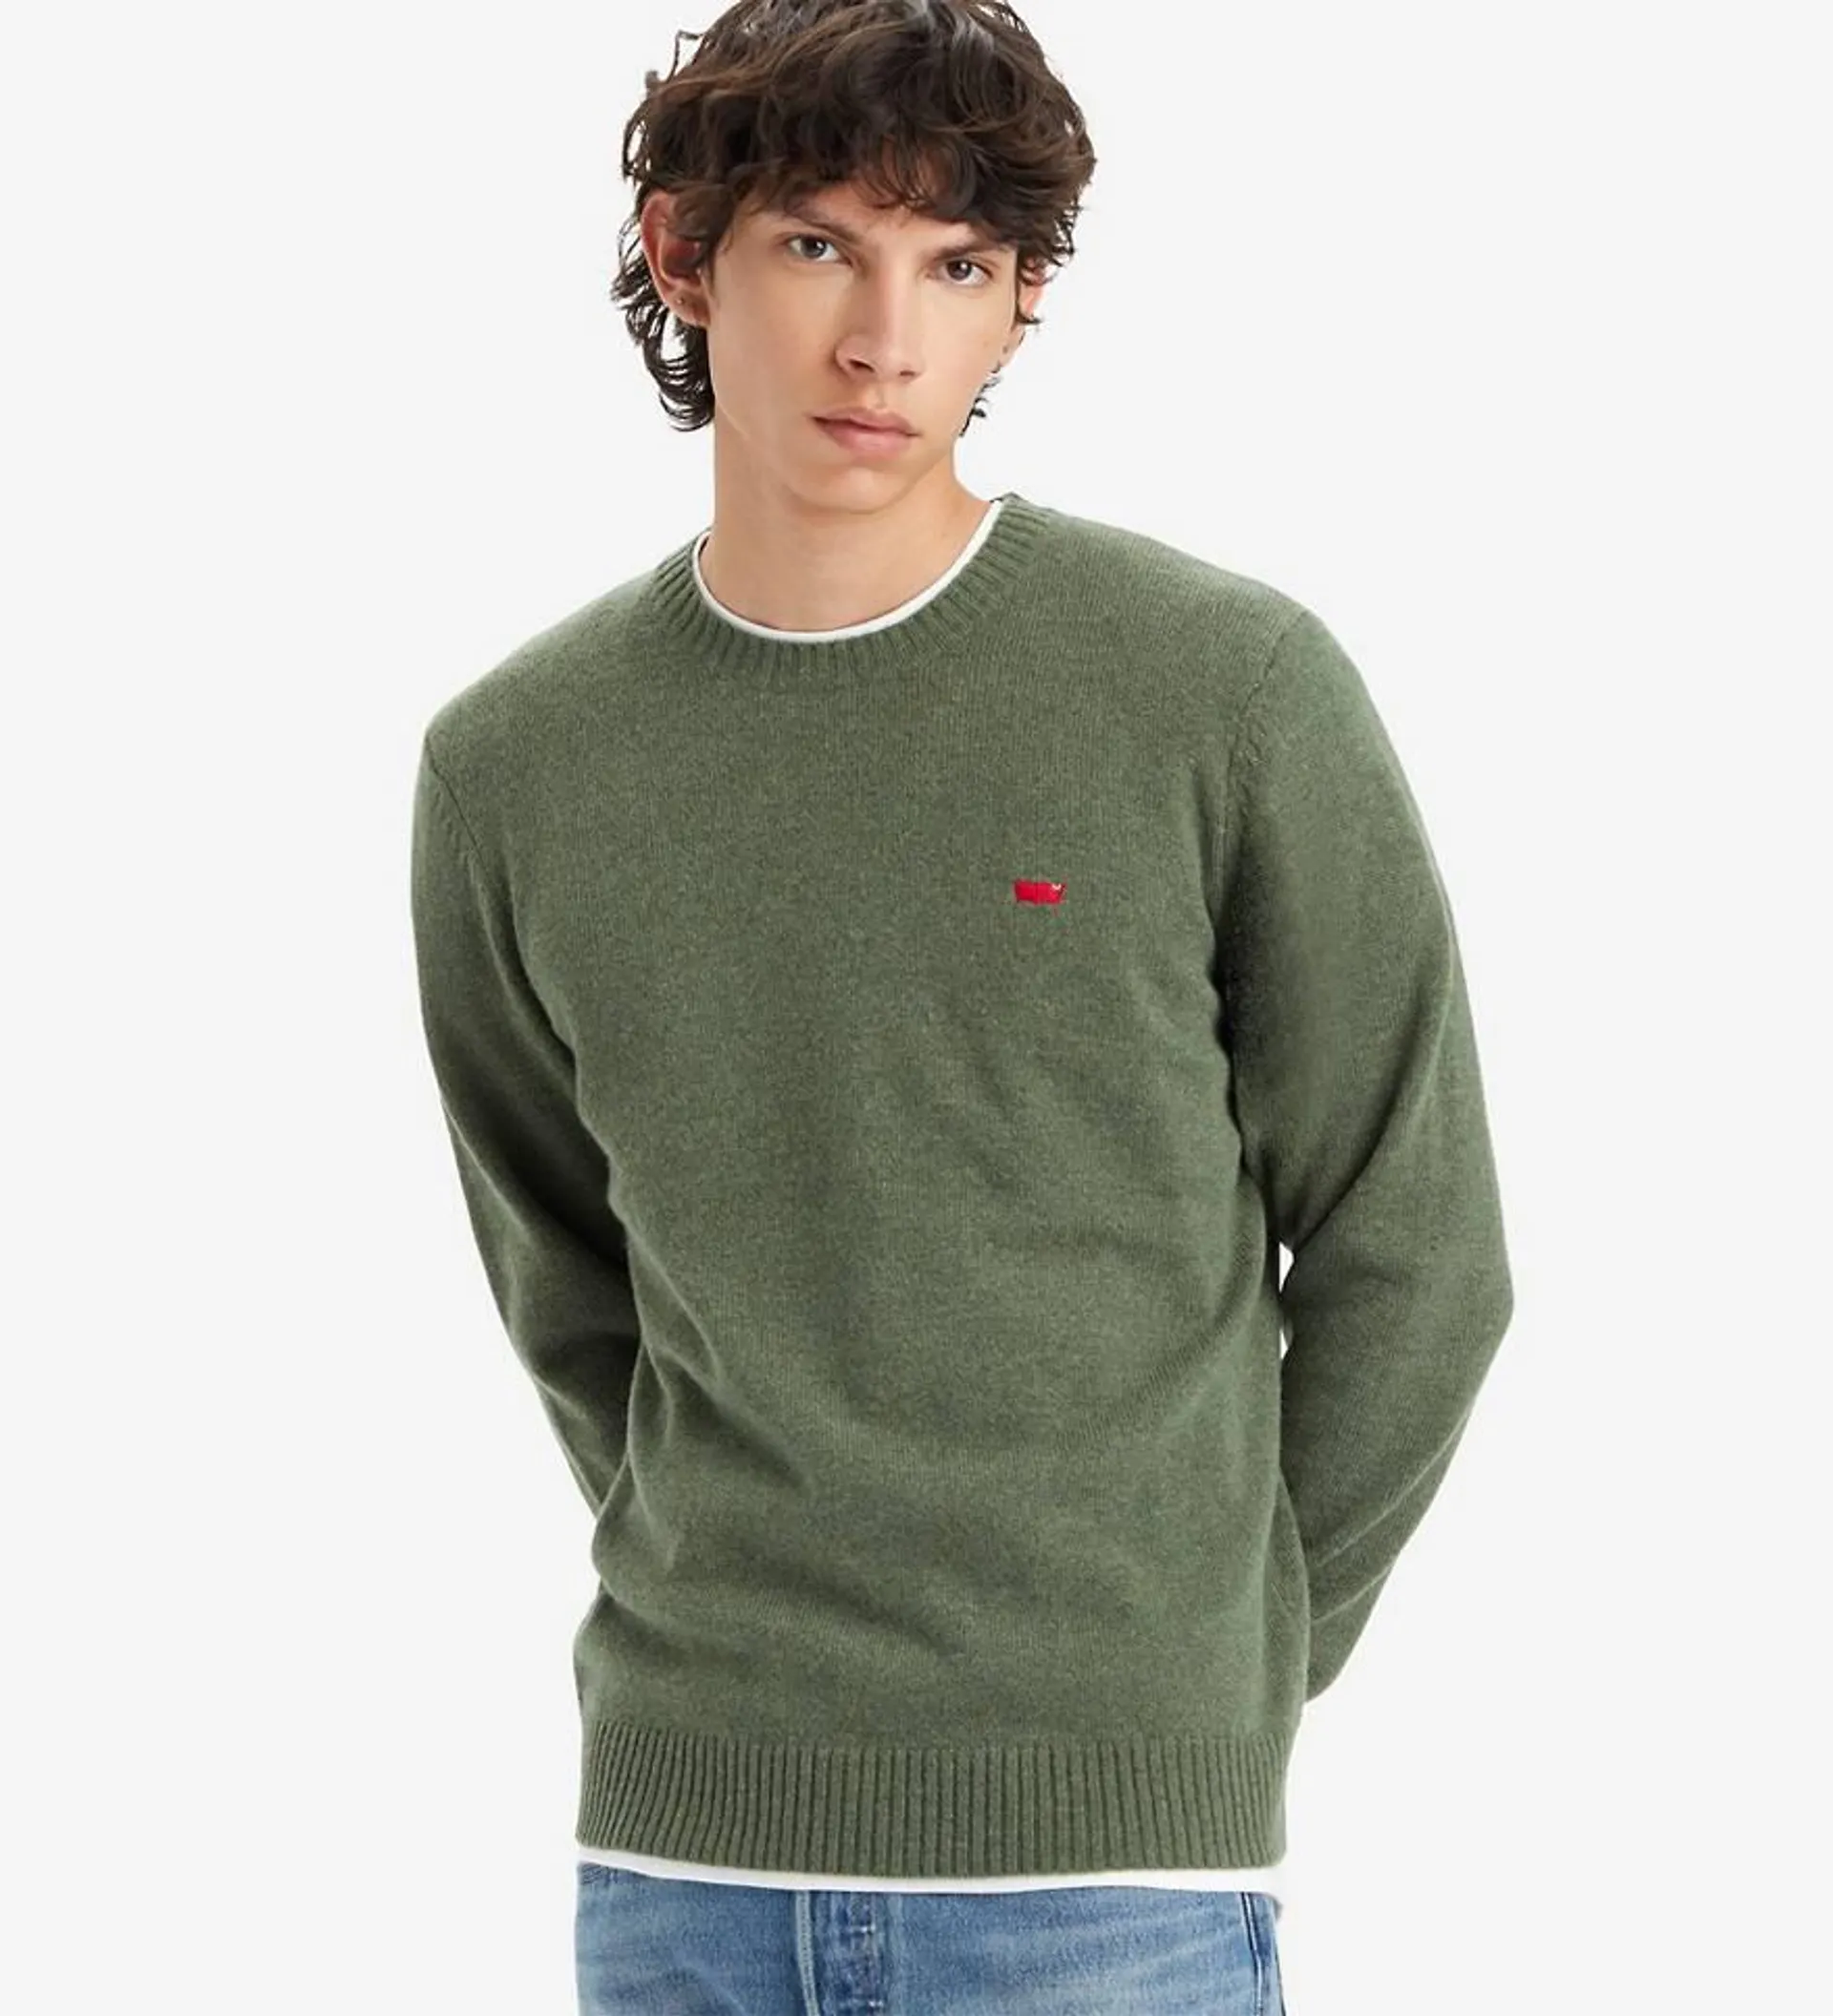 Original Housemark Sweater